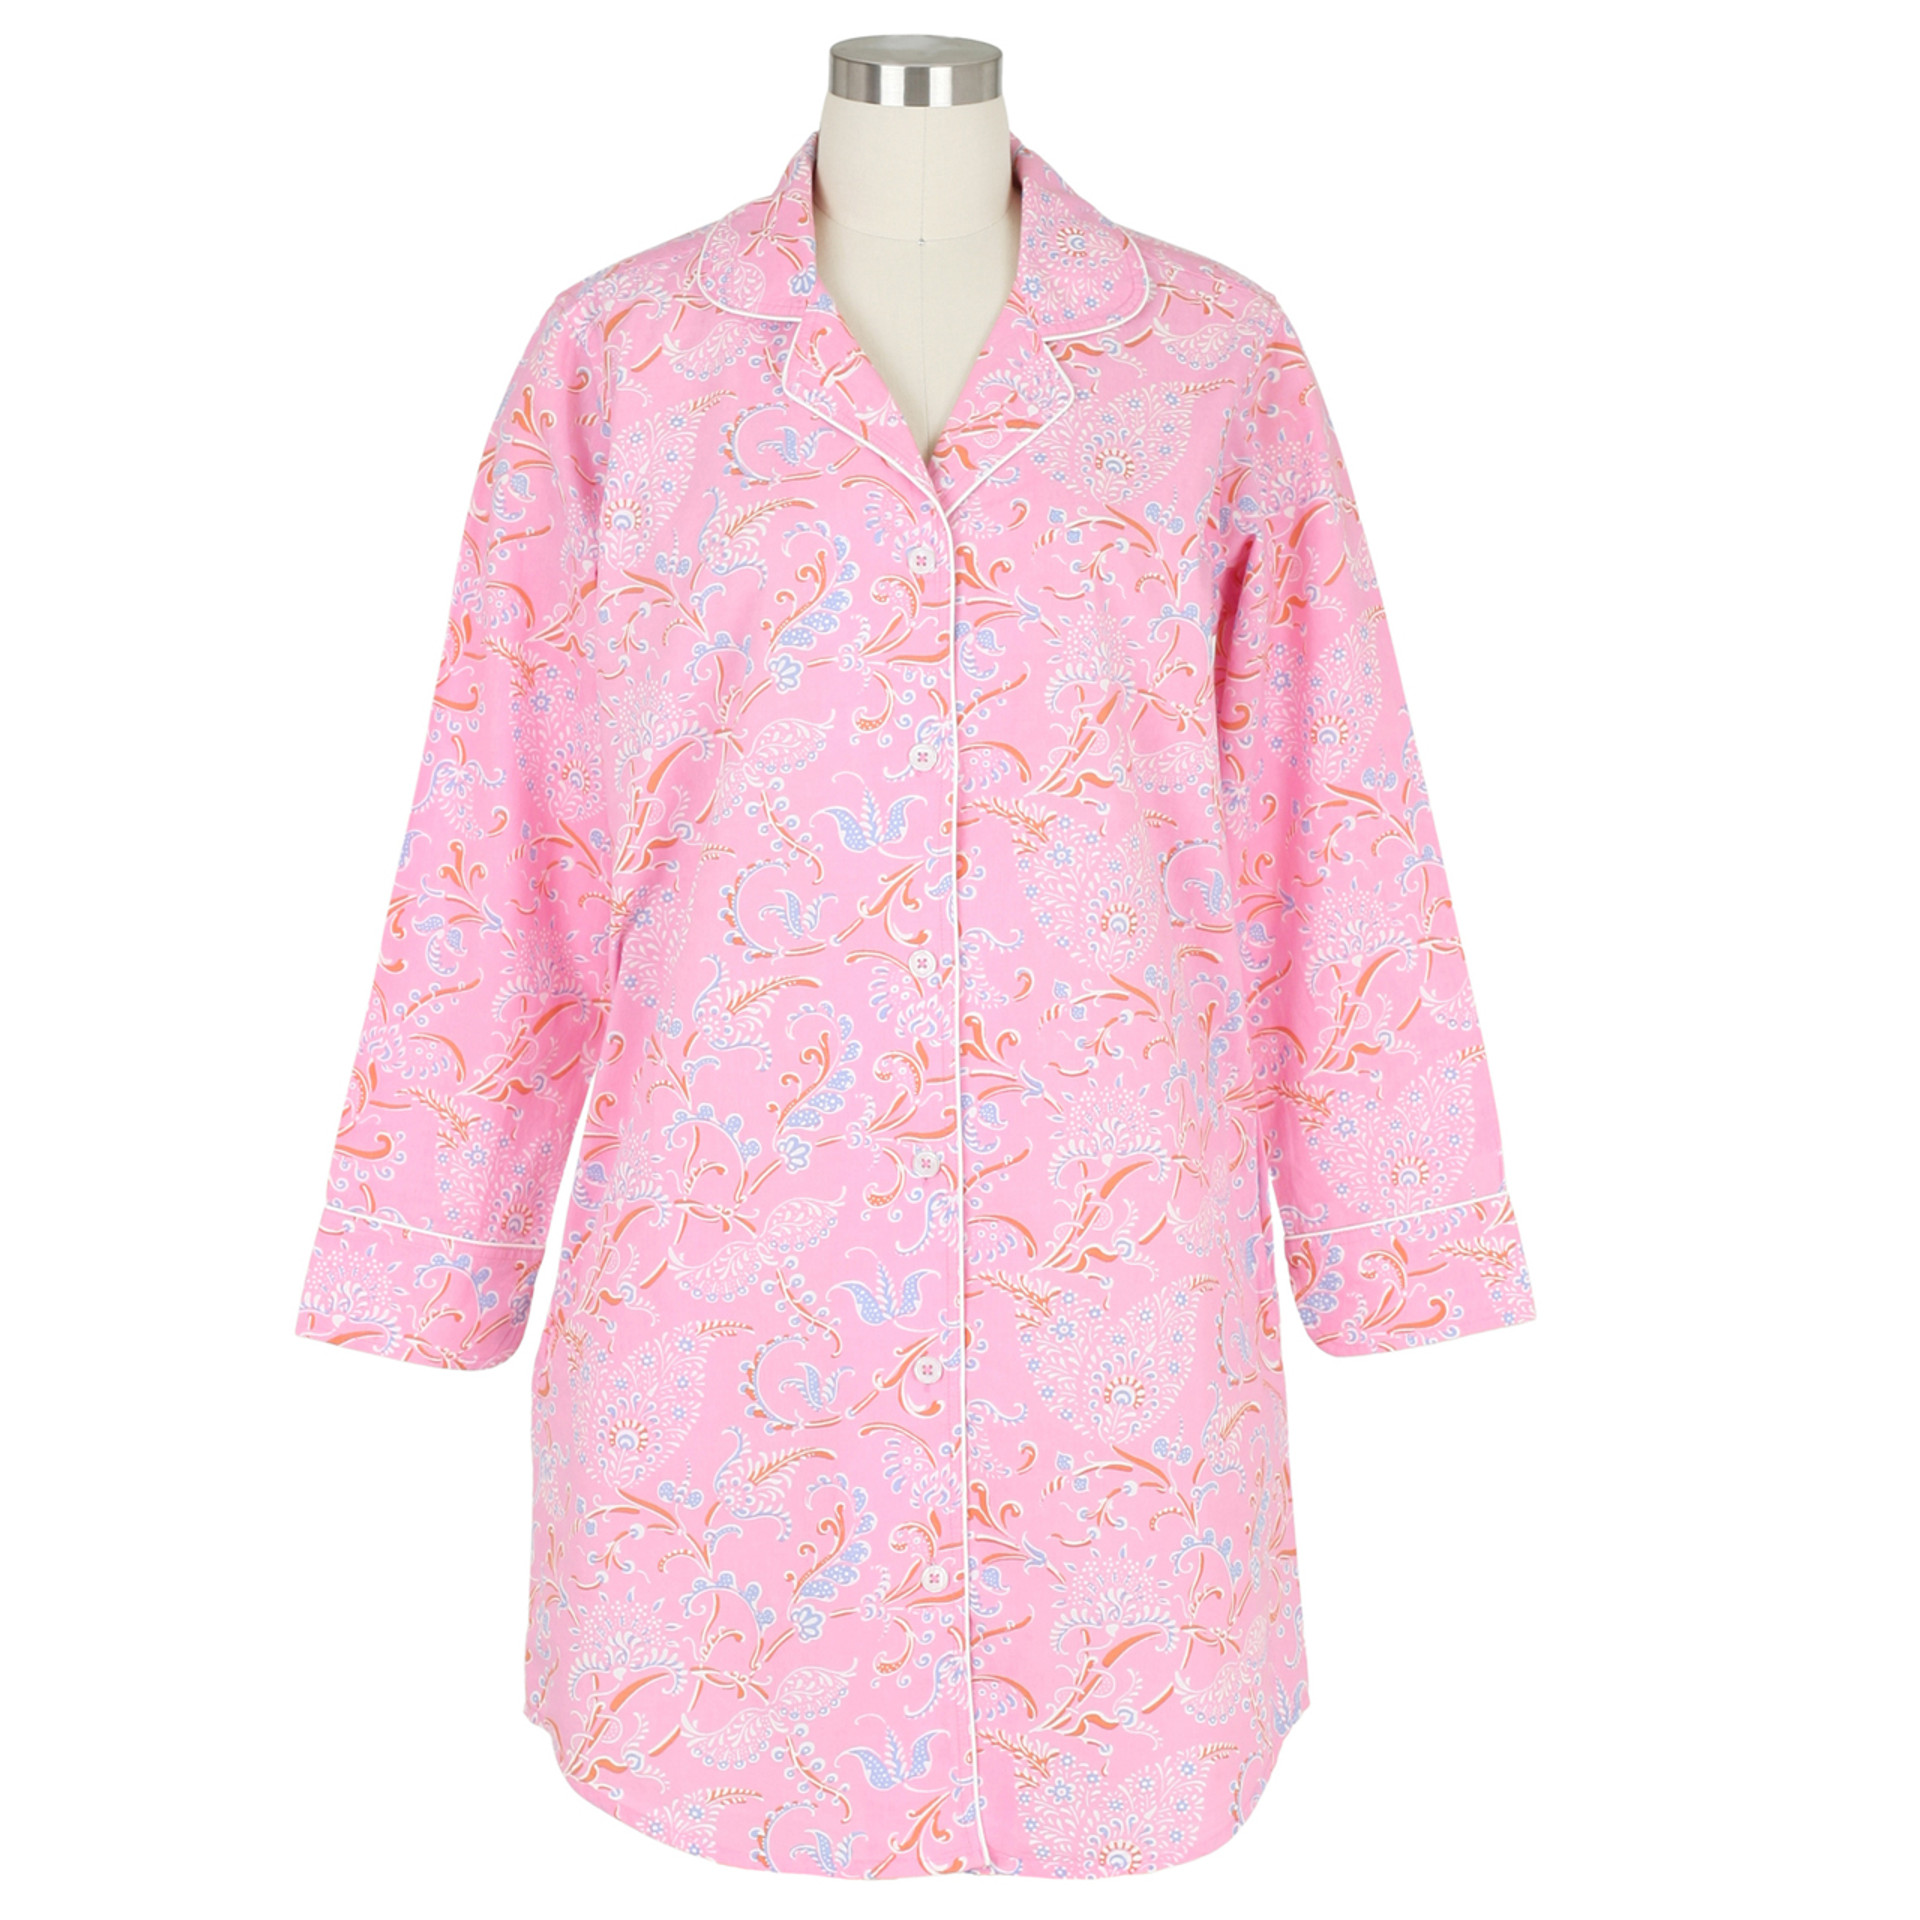 Softest Cotton Pajamas & Night Gowns | Needham Lane